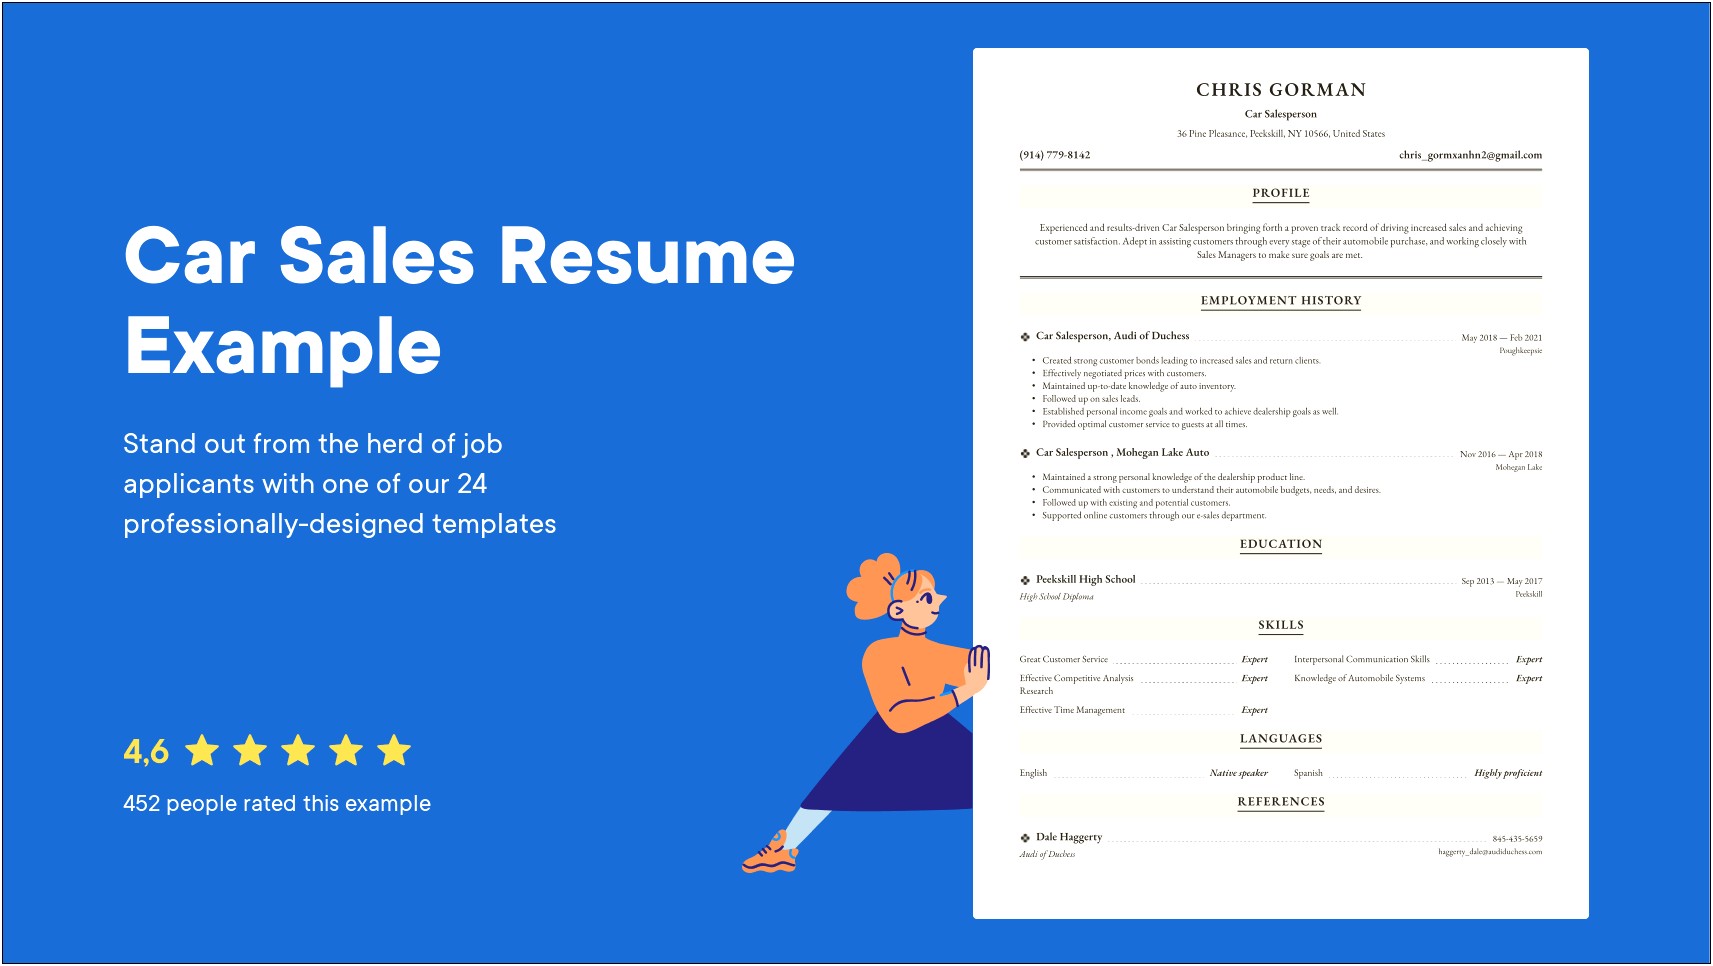 Car Sales Associate Job Description Resume